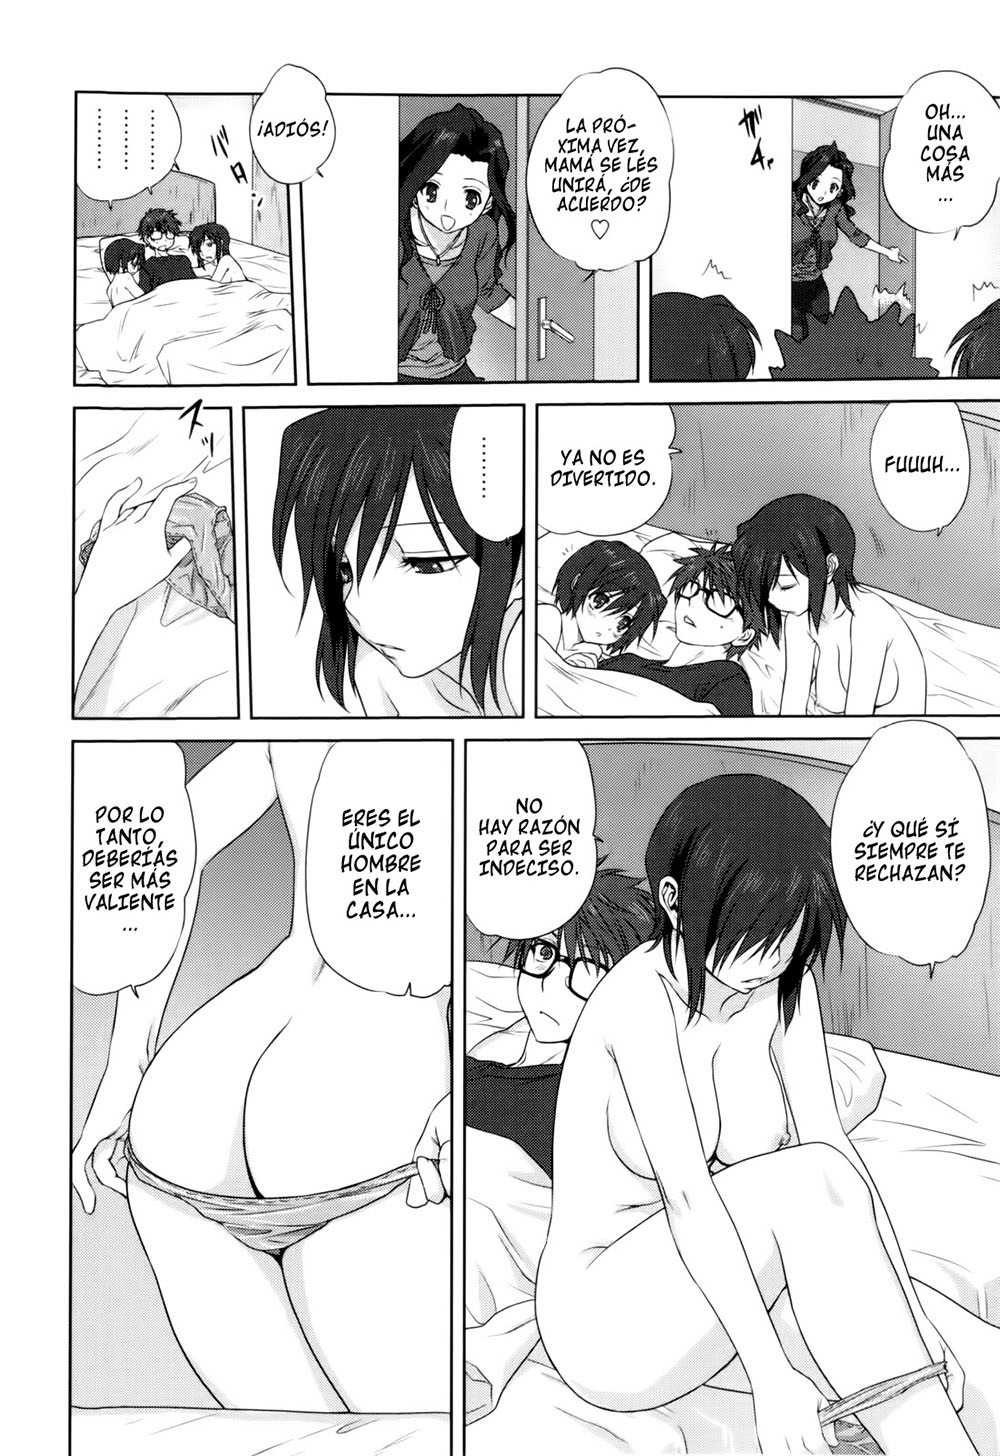 La Familia al Completo #2 - 3 - Comics Porno - Hentai Manga - Cartoon XXX